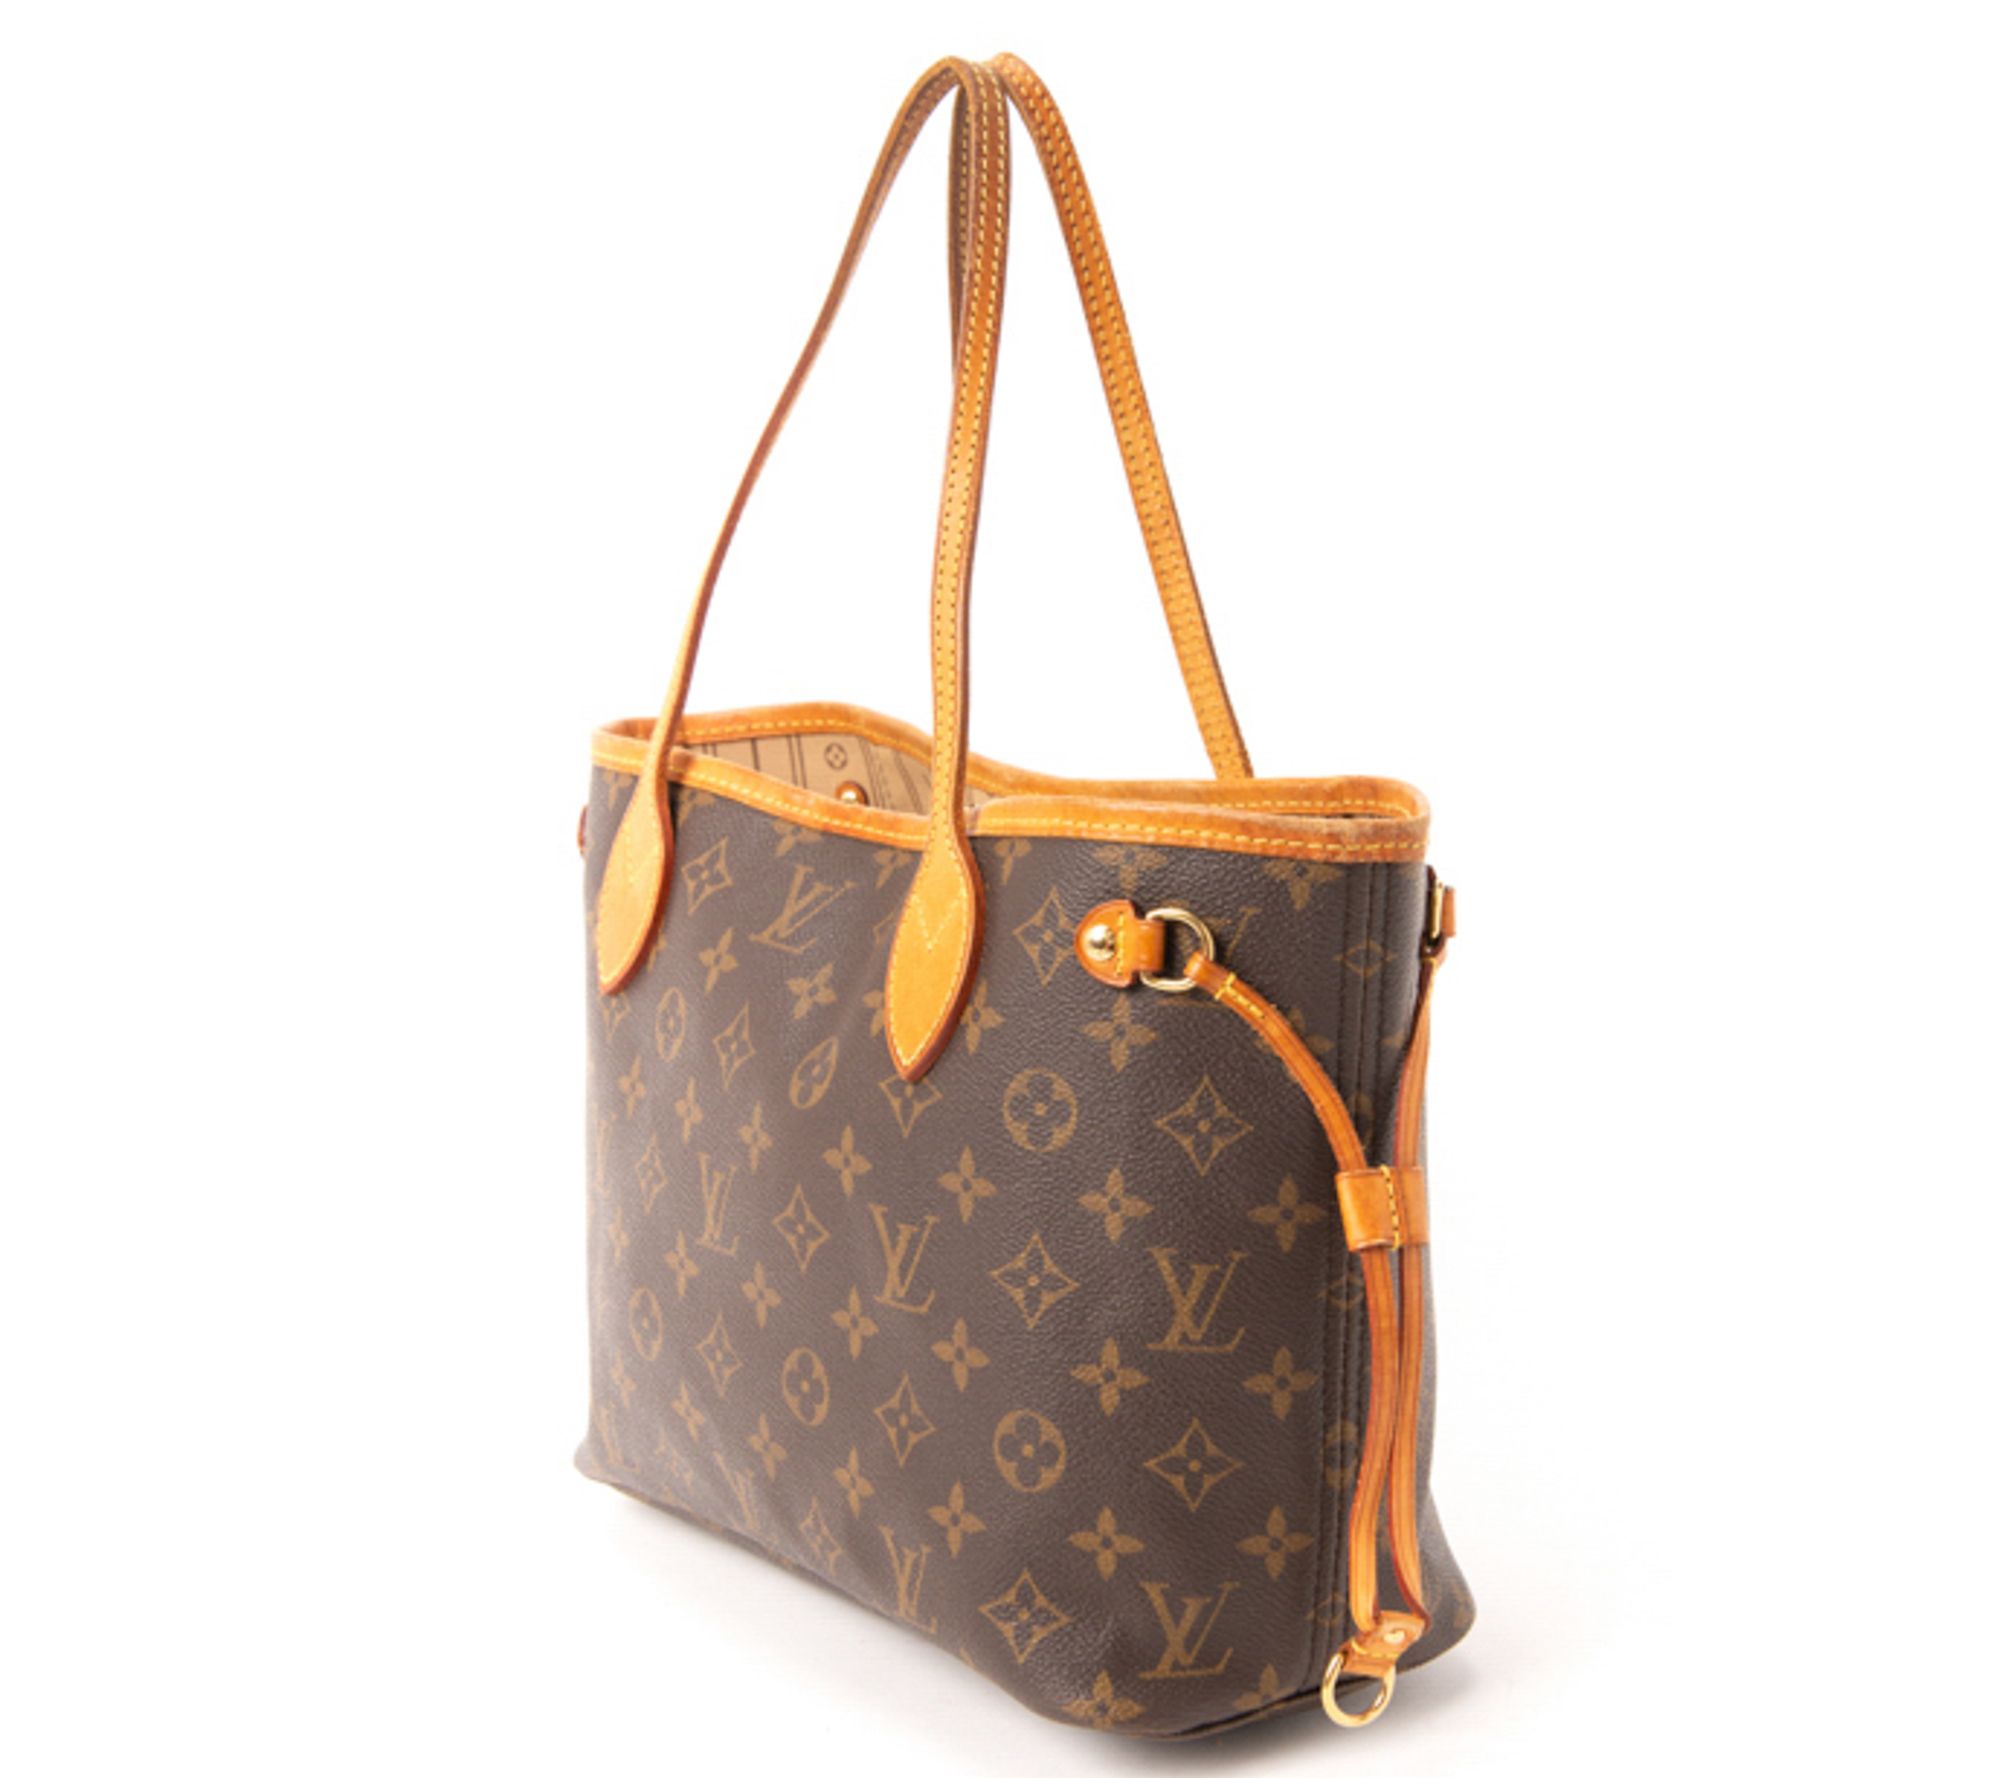 Lot - Louis Vuitton Neverfull Game On Shoulder Bag